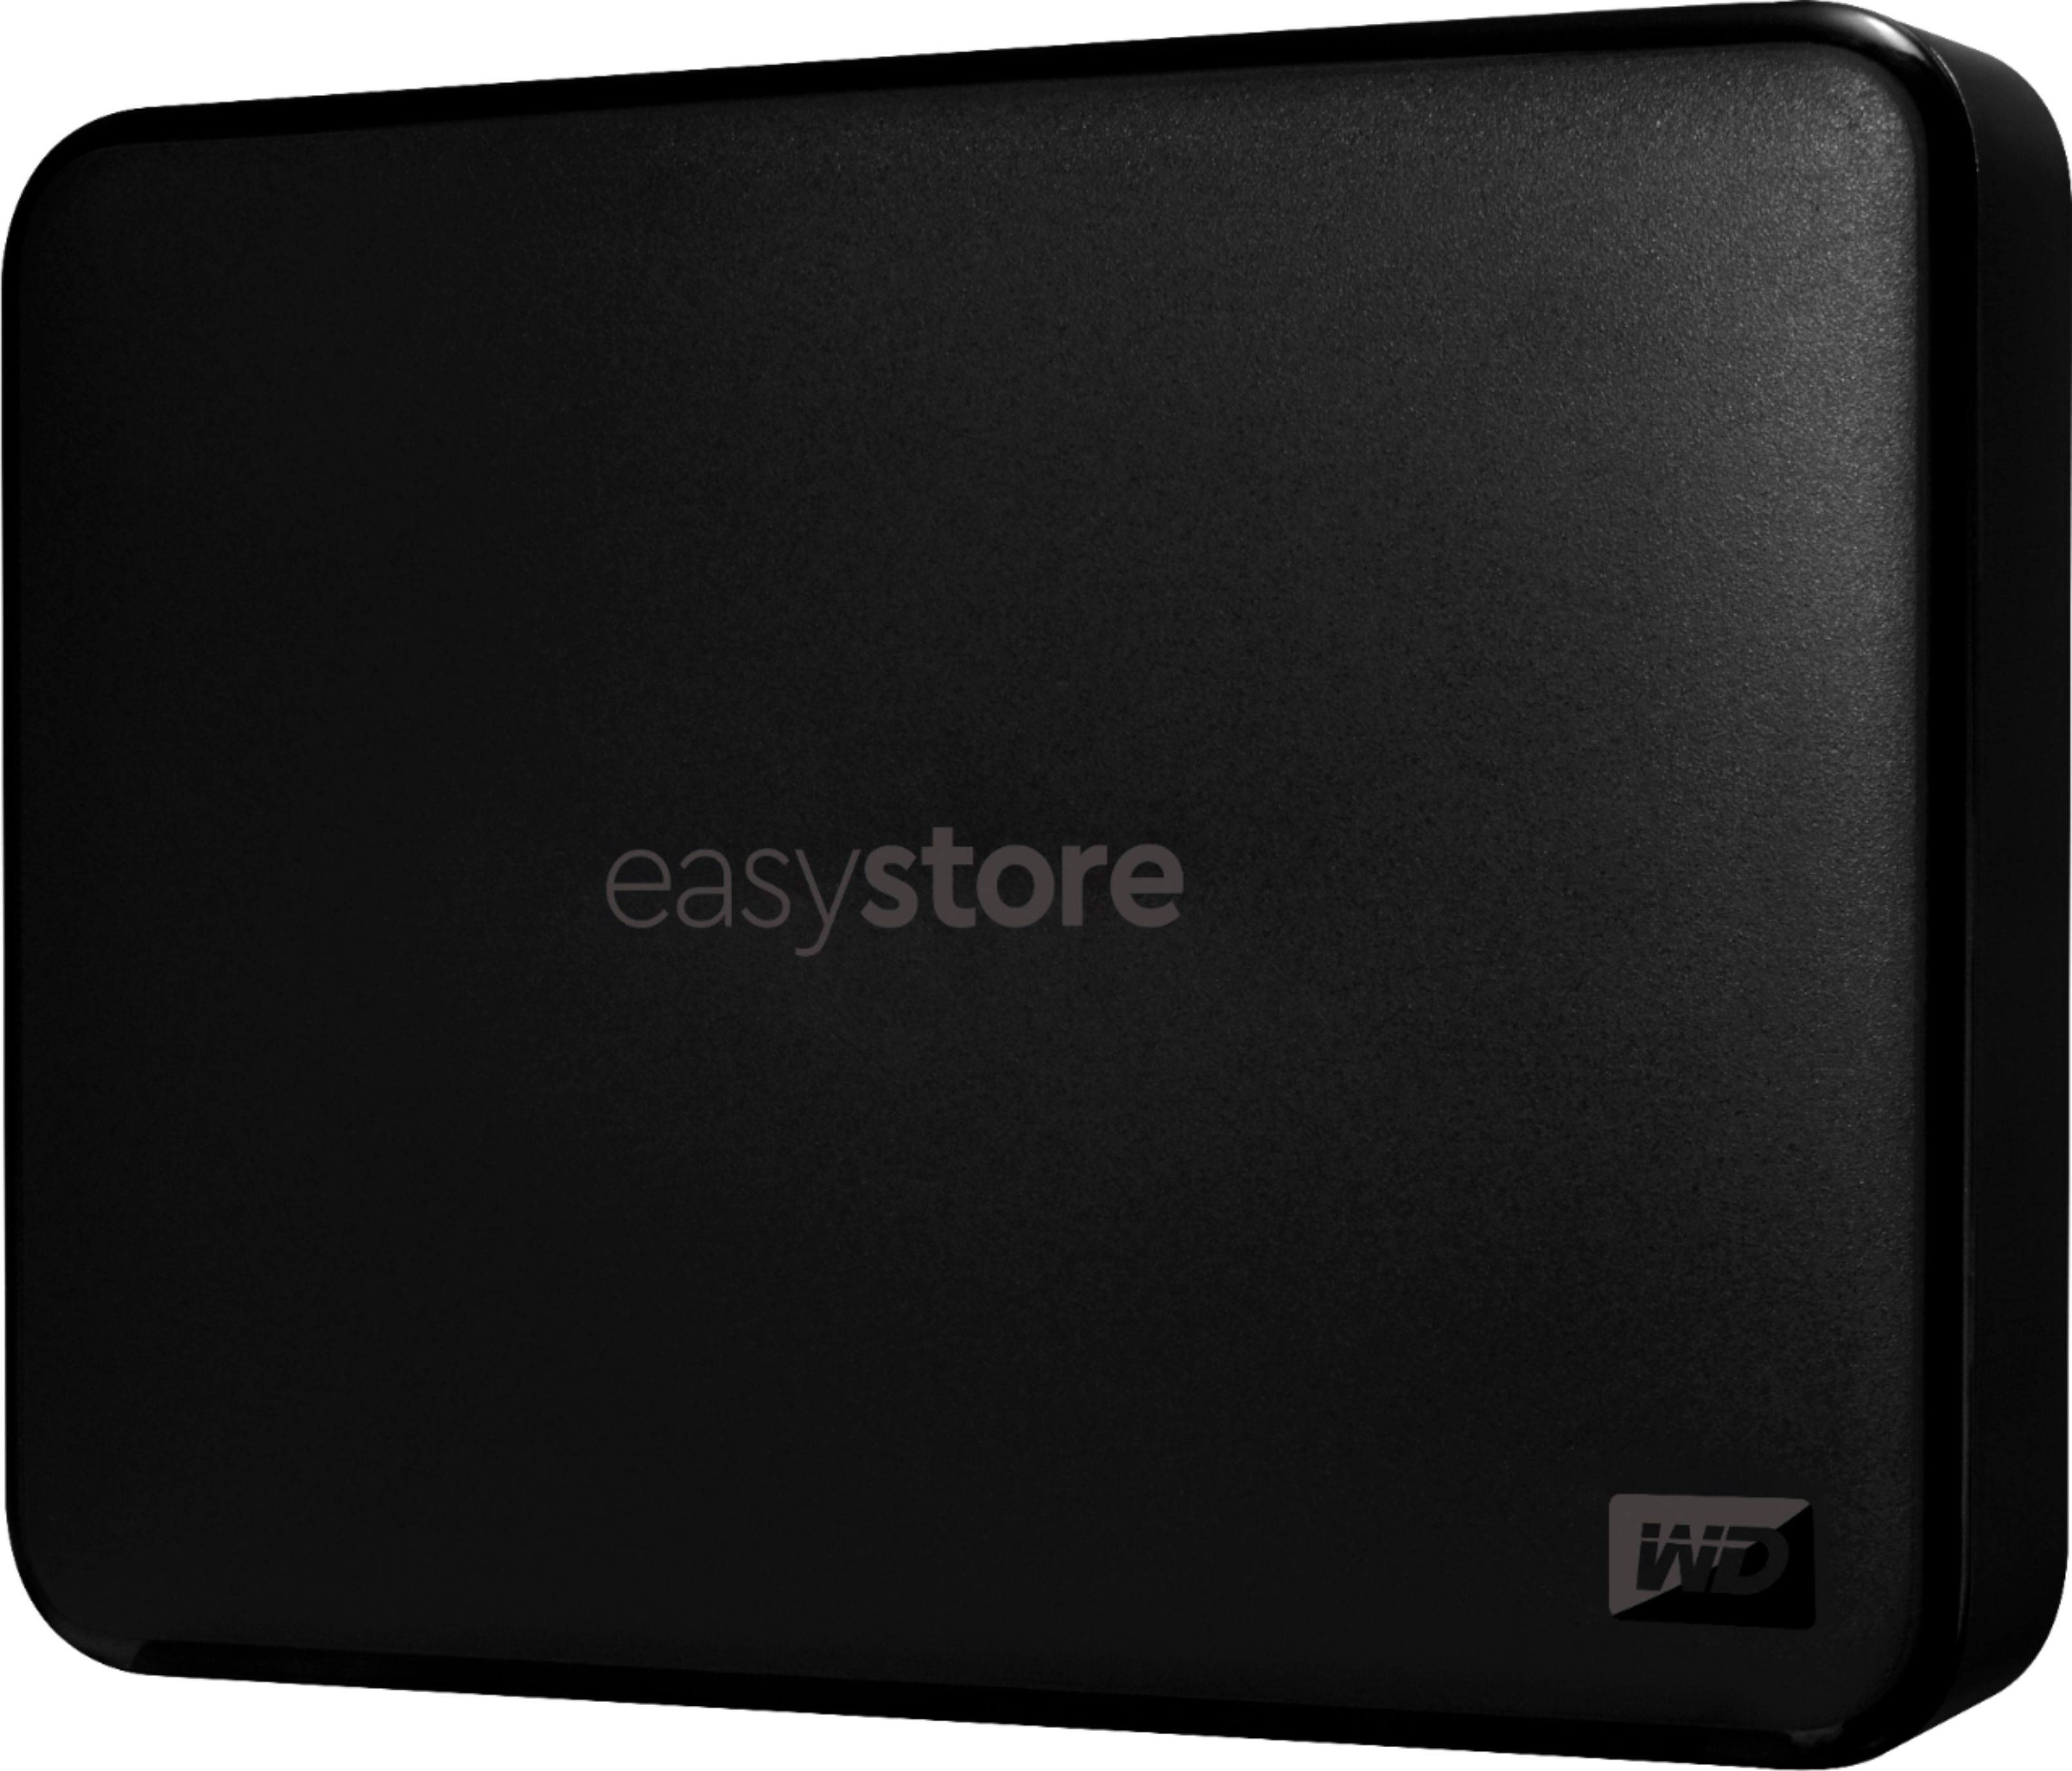 WD Easystore 5TB External USB 3.0 Portable Hard Drive Black WDBAJP0050BBK-WESN - Best Buy $107.99